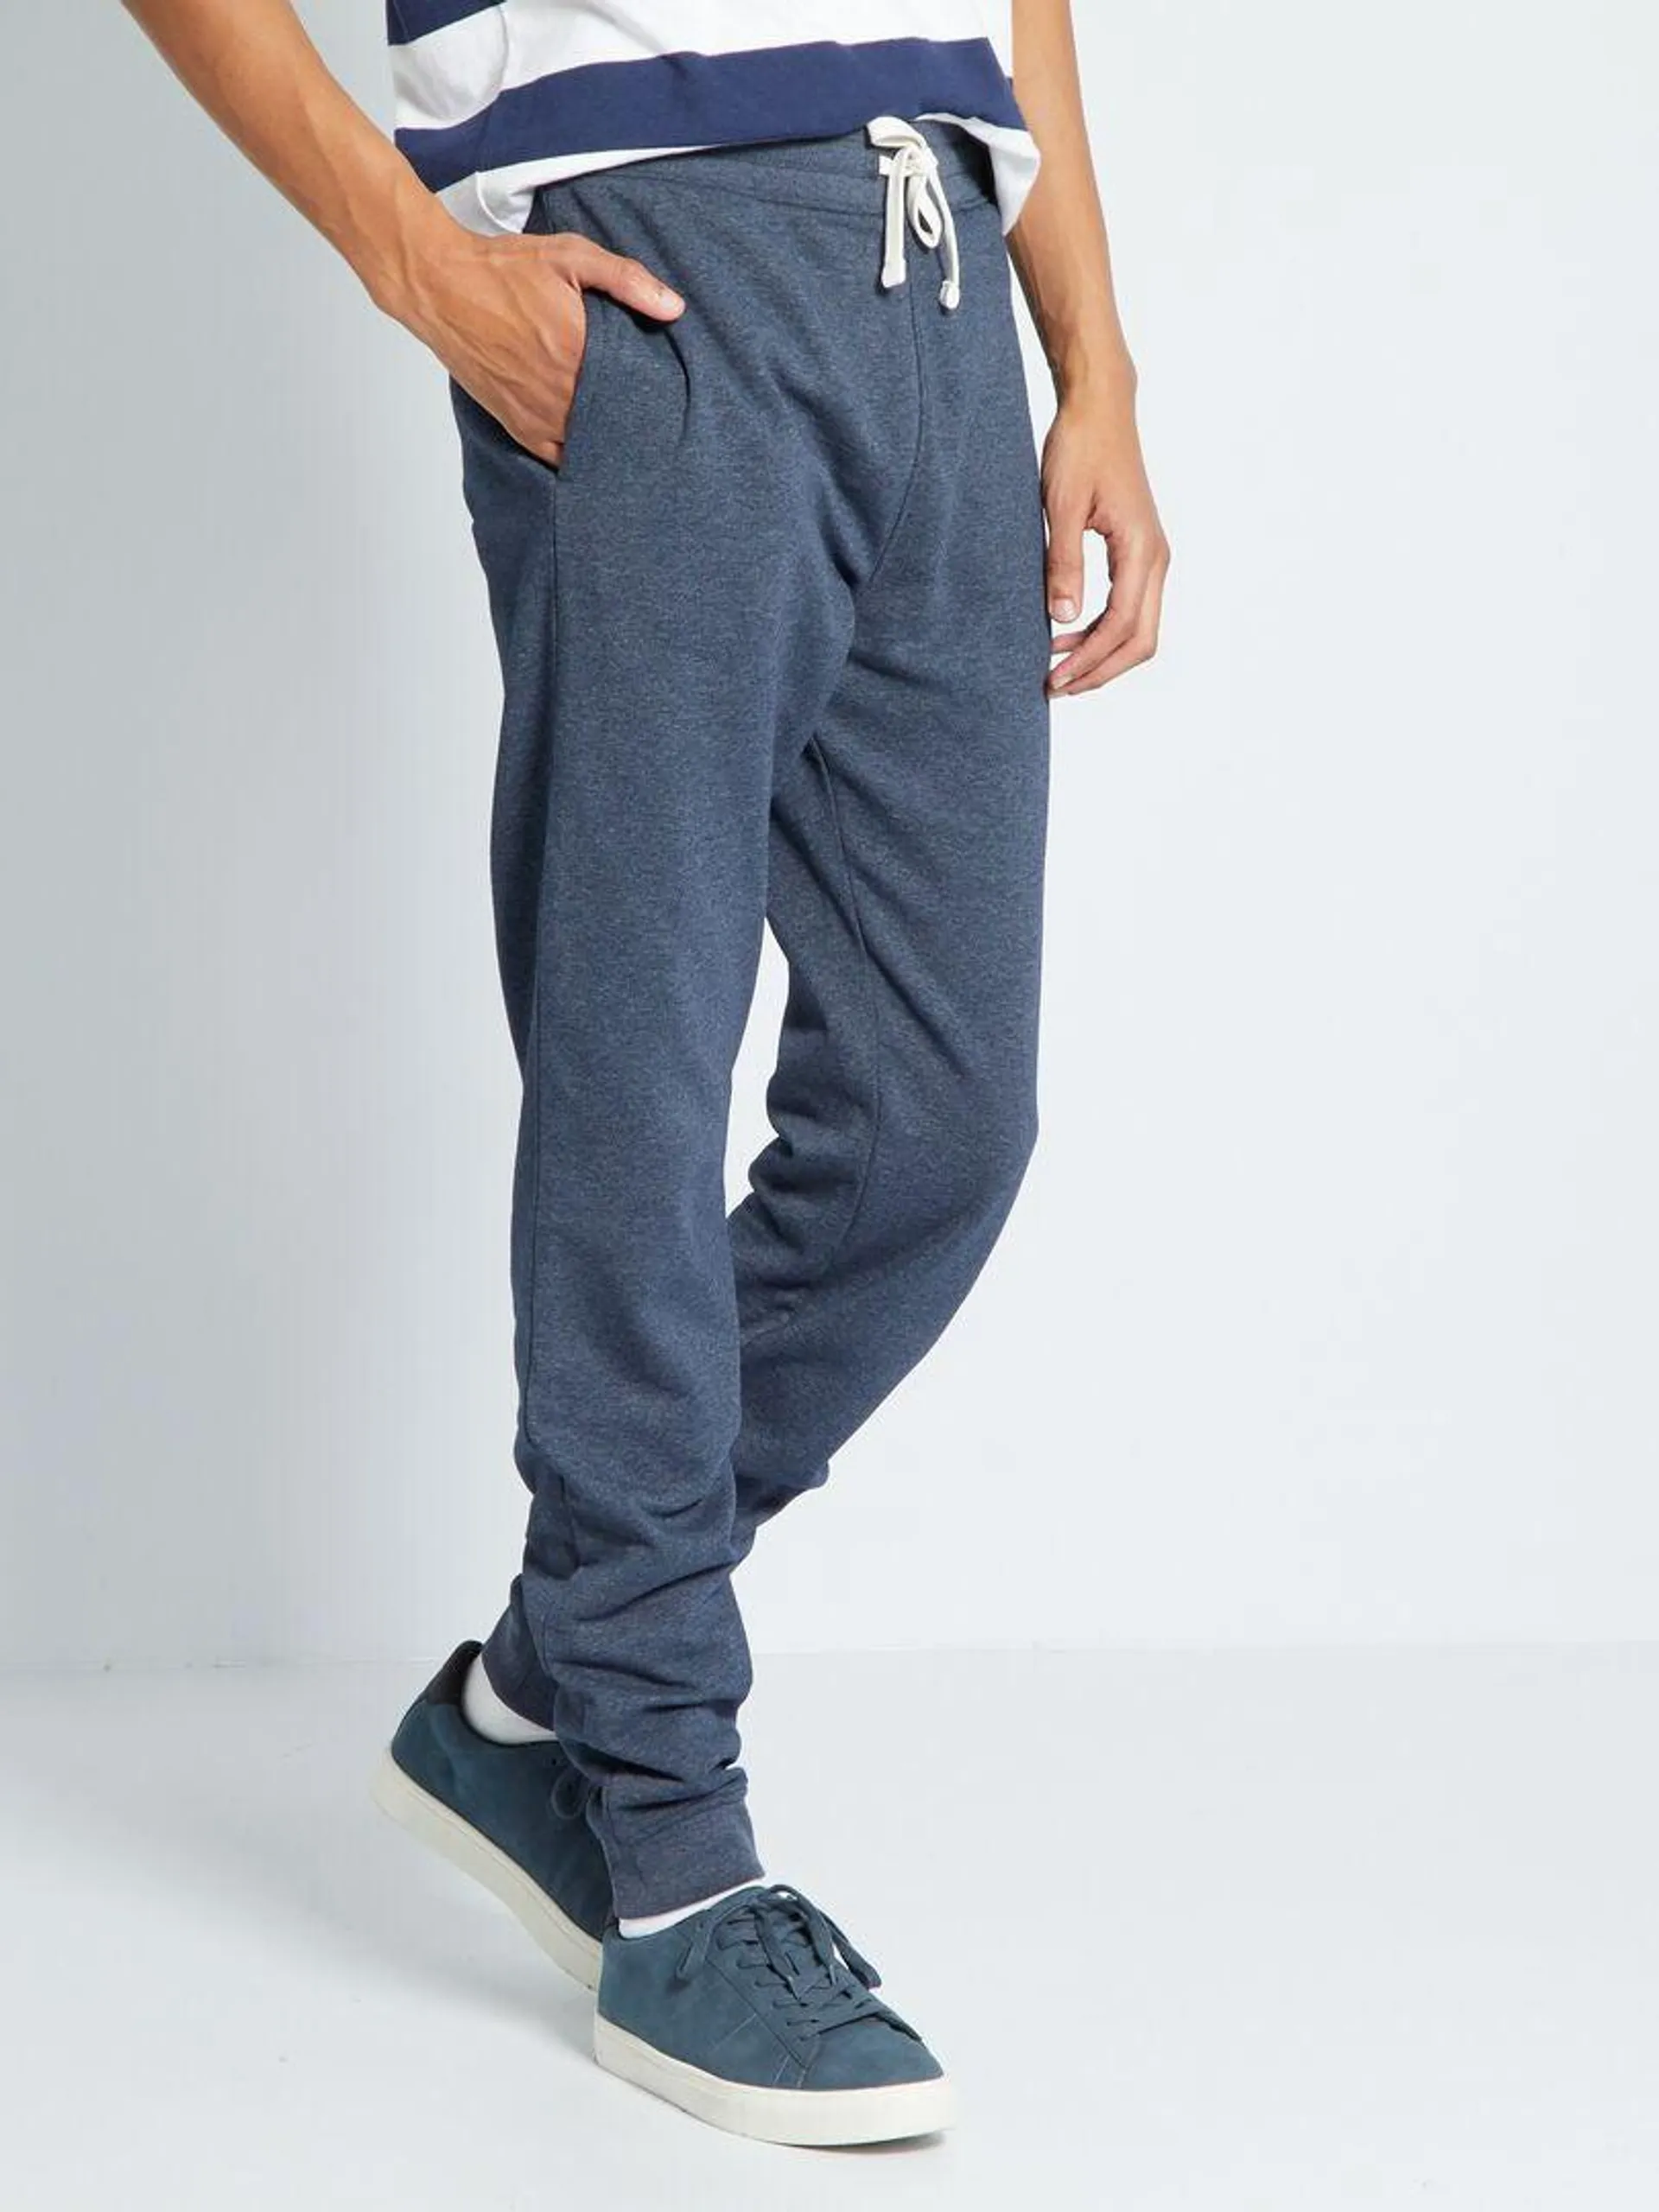 Pantaloni in tessuto felpato L36 + 190 cm - BLU